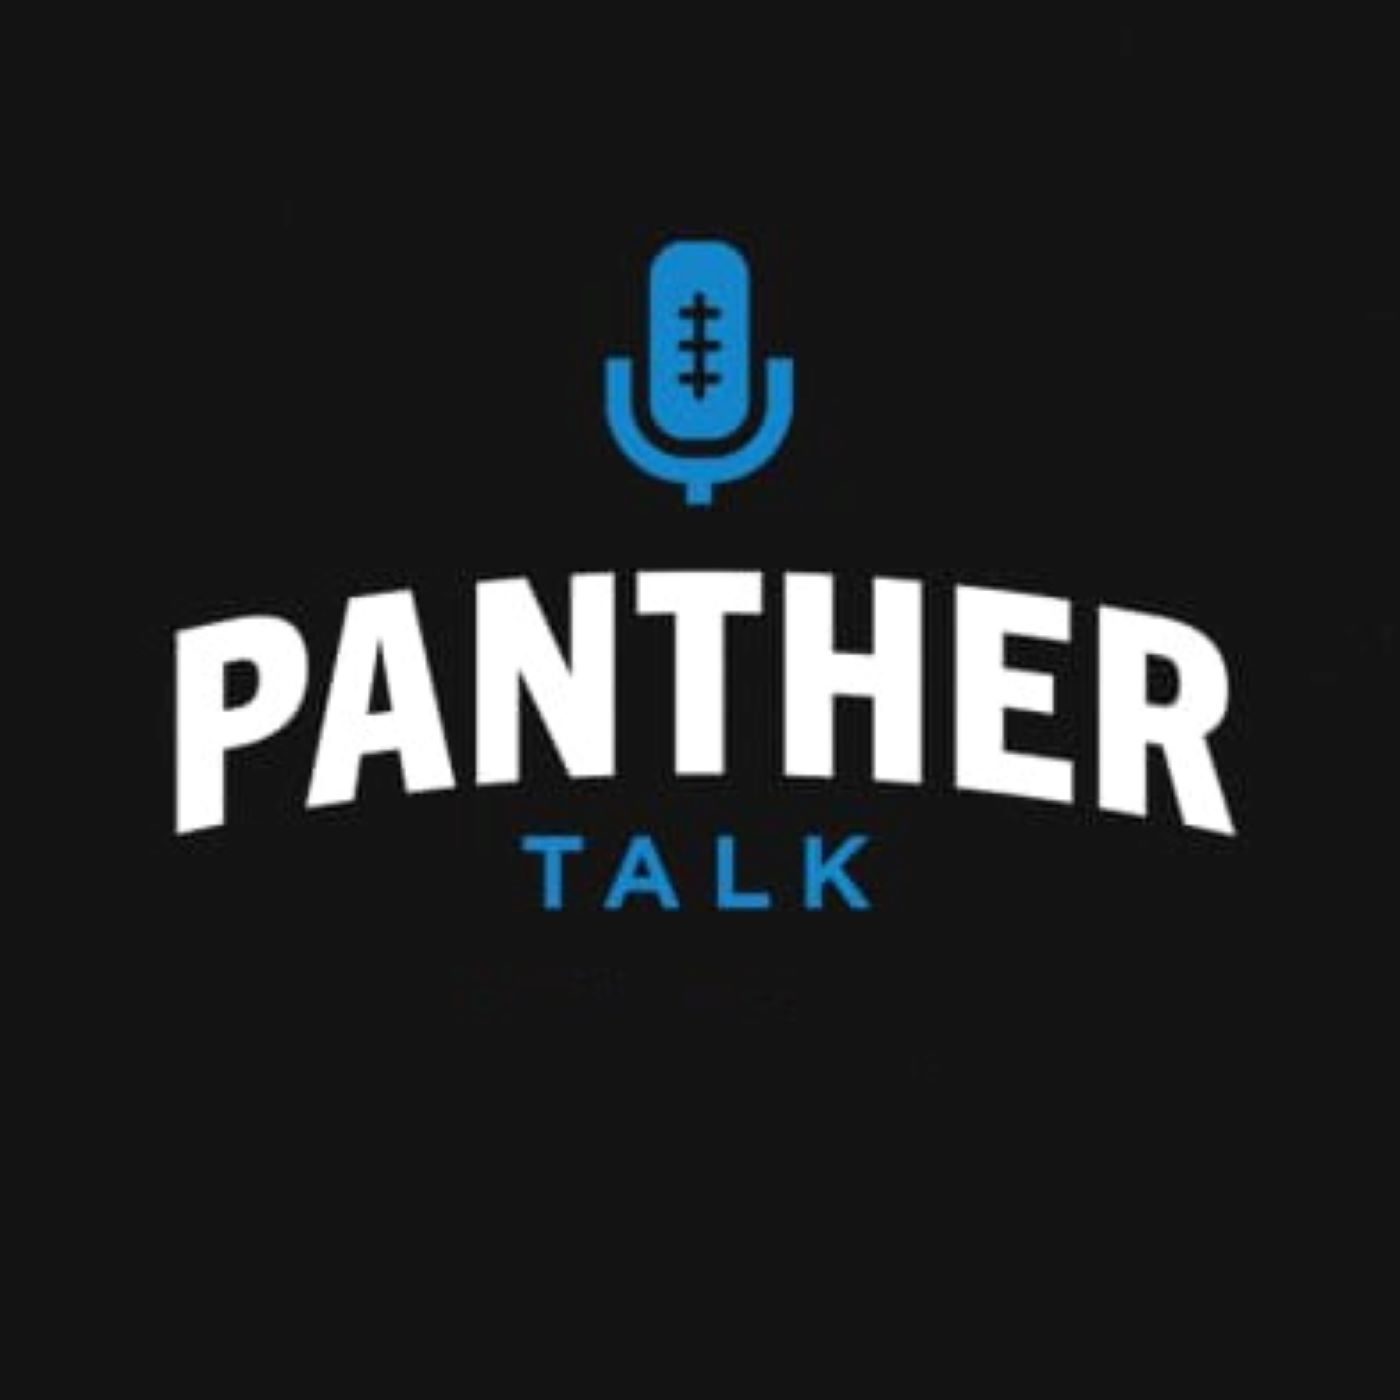 Panther Talk (November 20th)